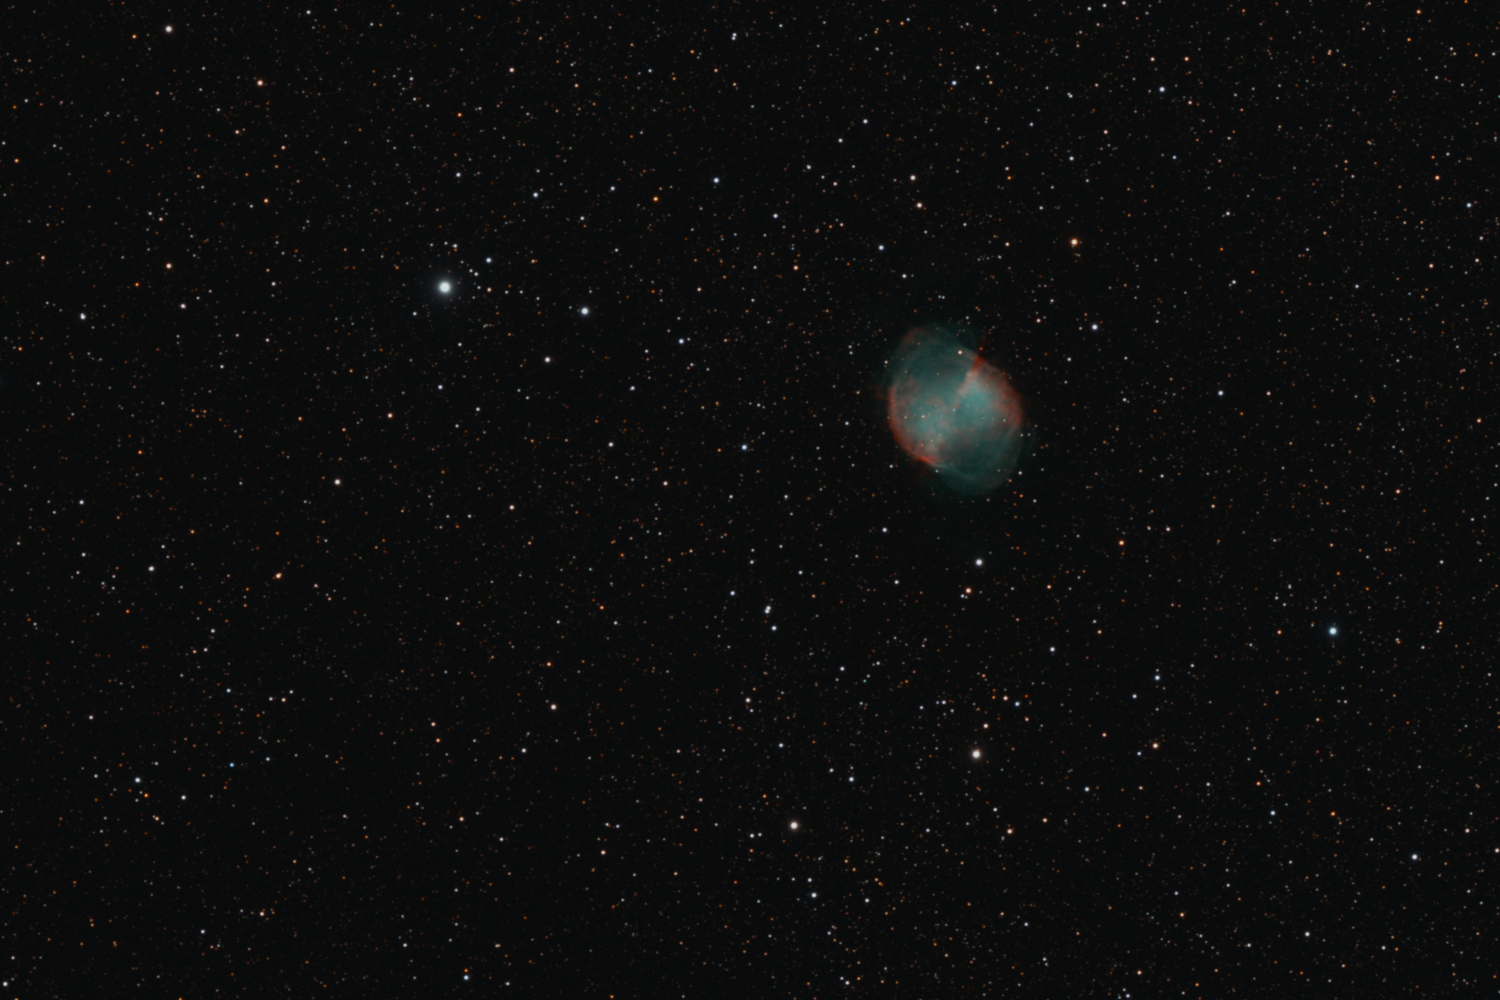 M27, The Dumbell Nebula